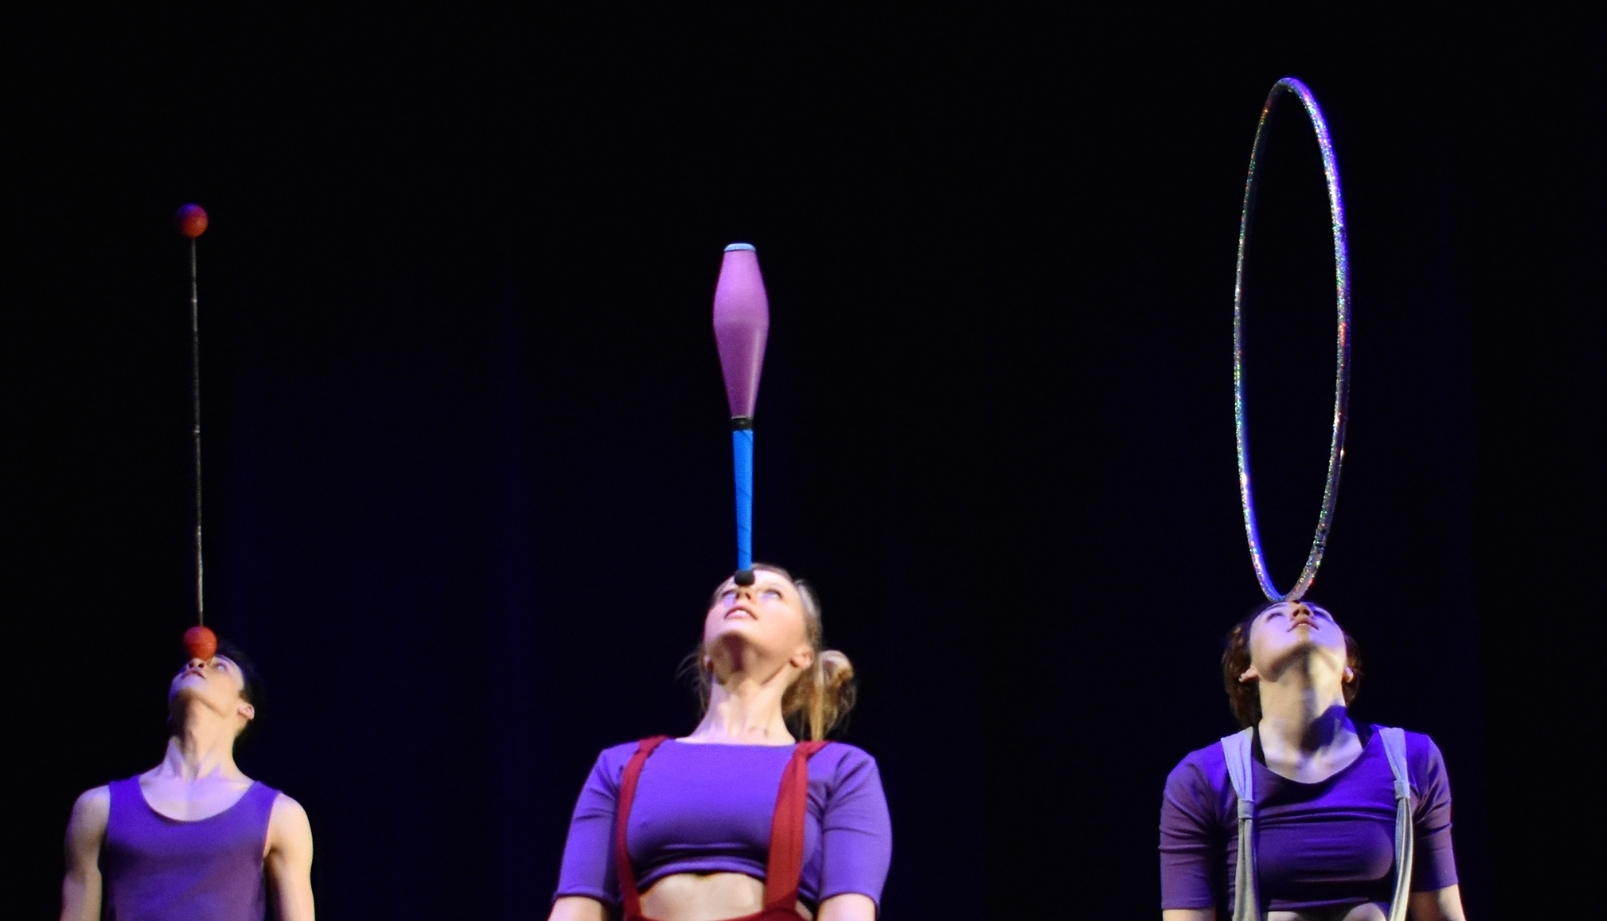 Three jugglers wearing purple, each balancing a prop on their head. A juggler balancing a staff on the left. A juggler balancing a club in the middle. A juggler balancing a hula hoop on the right.